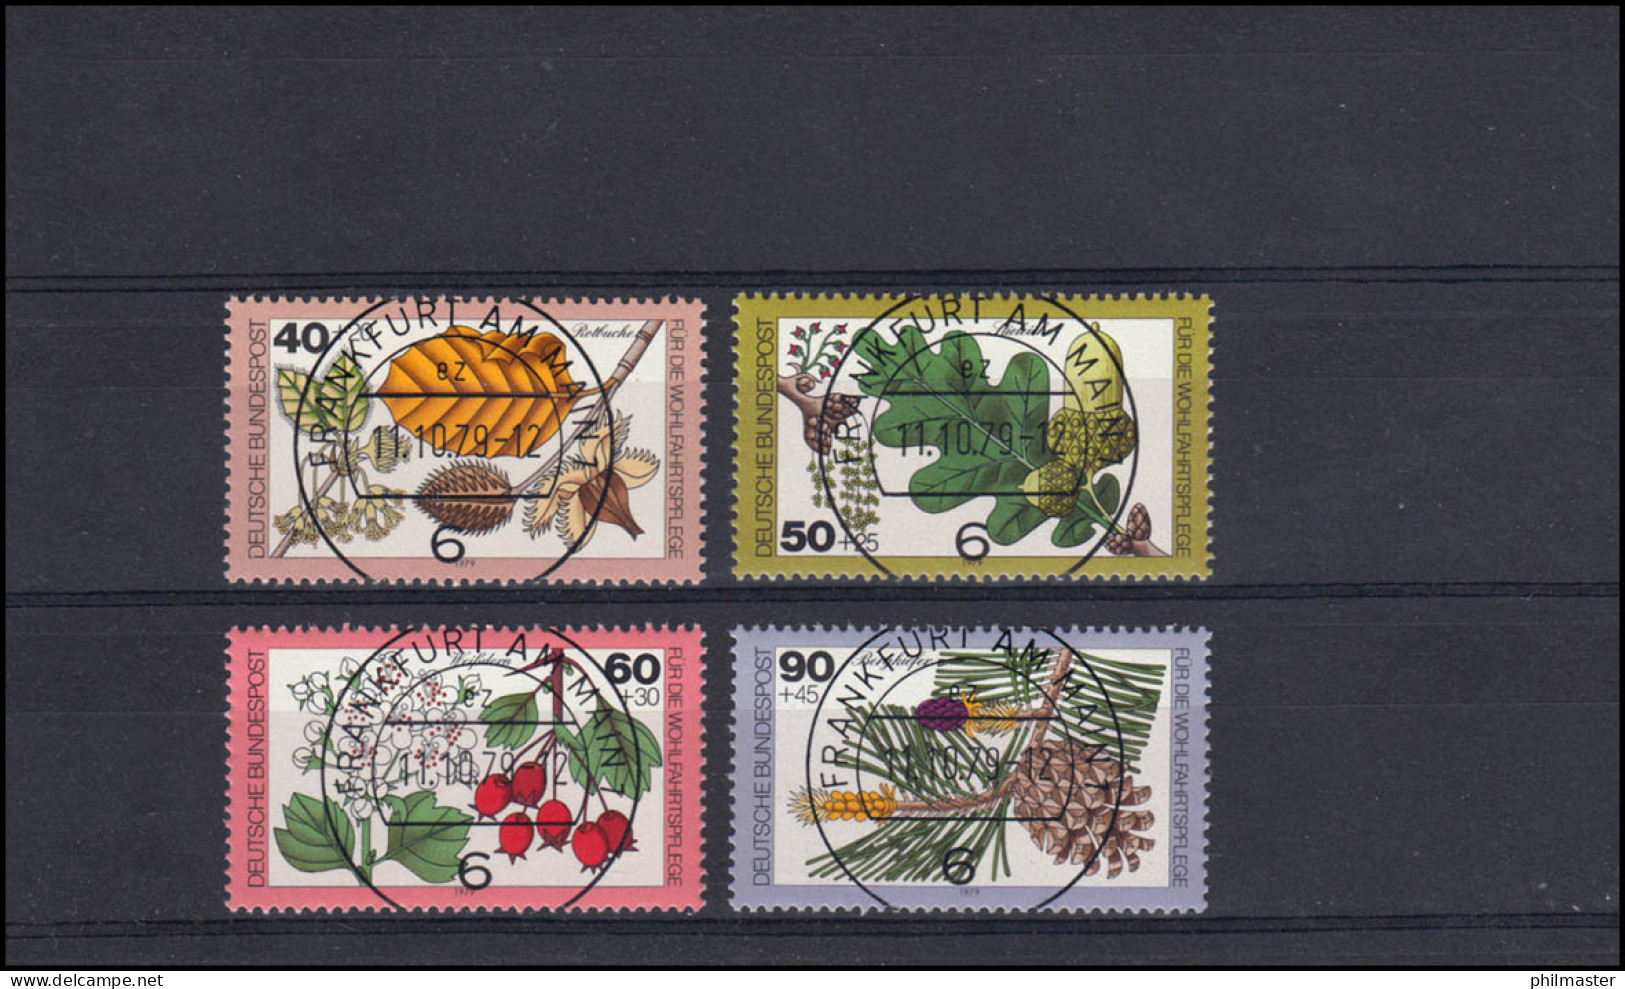 1024-1027 Blätter, Blüten, Früchte Des Waldes, Satz Voll-O Der VS Frankfurt 1979 - Used Stamps